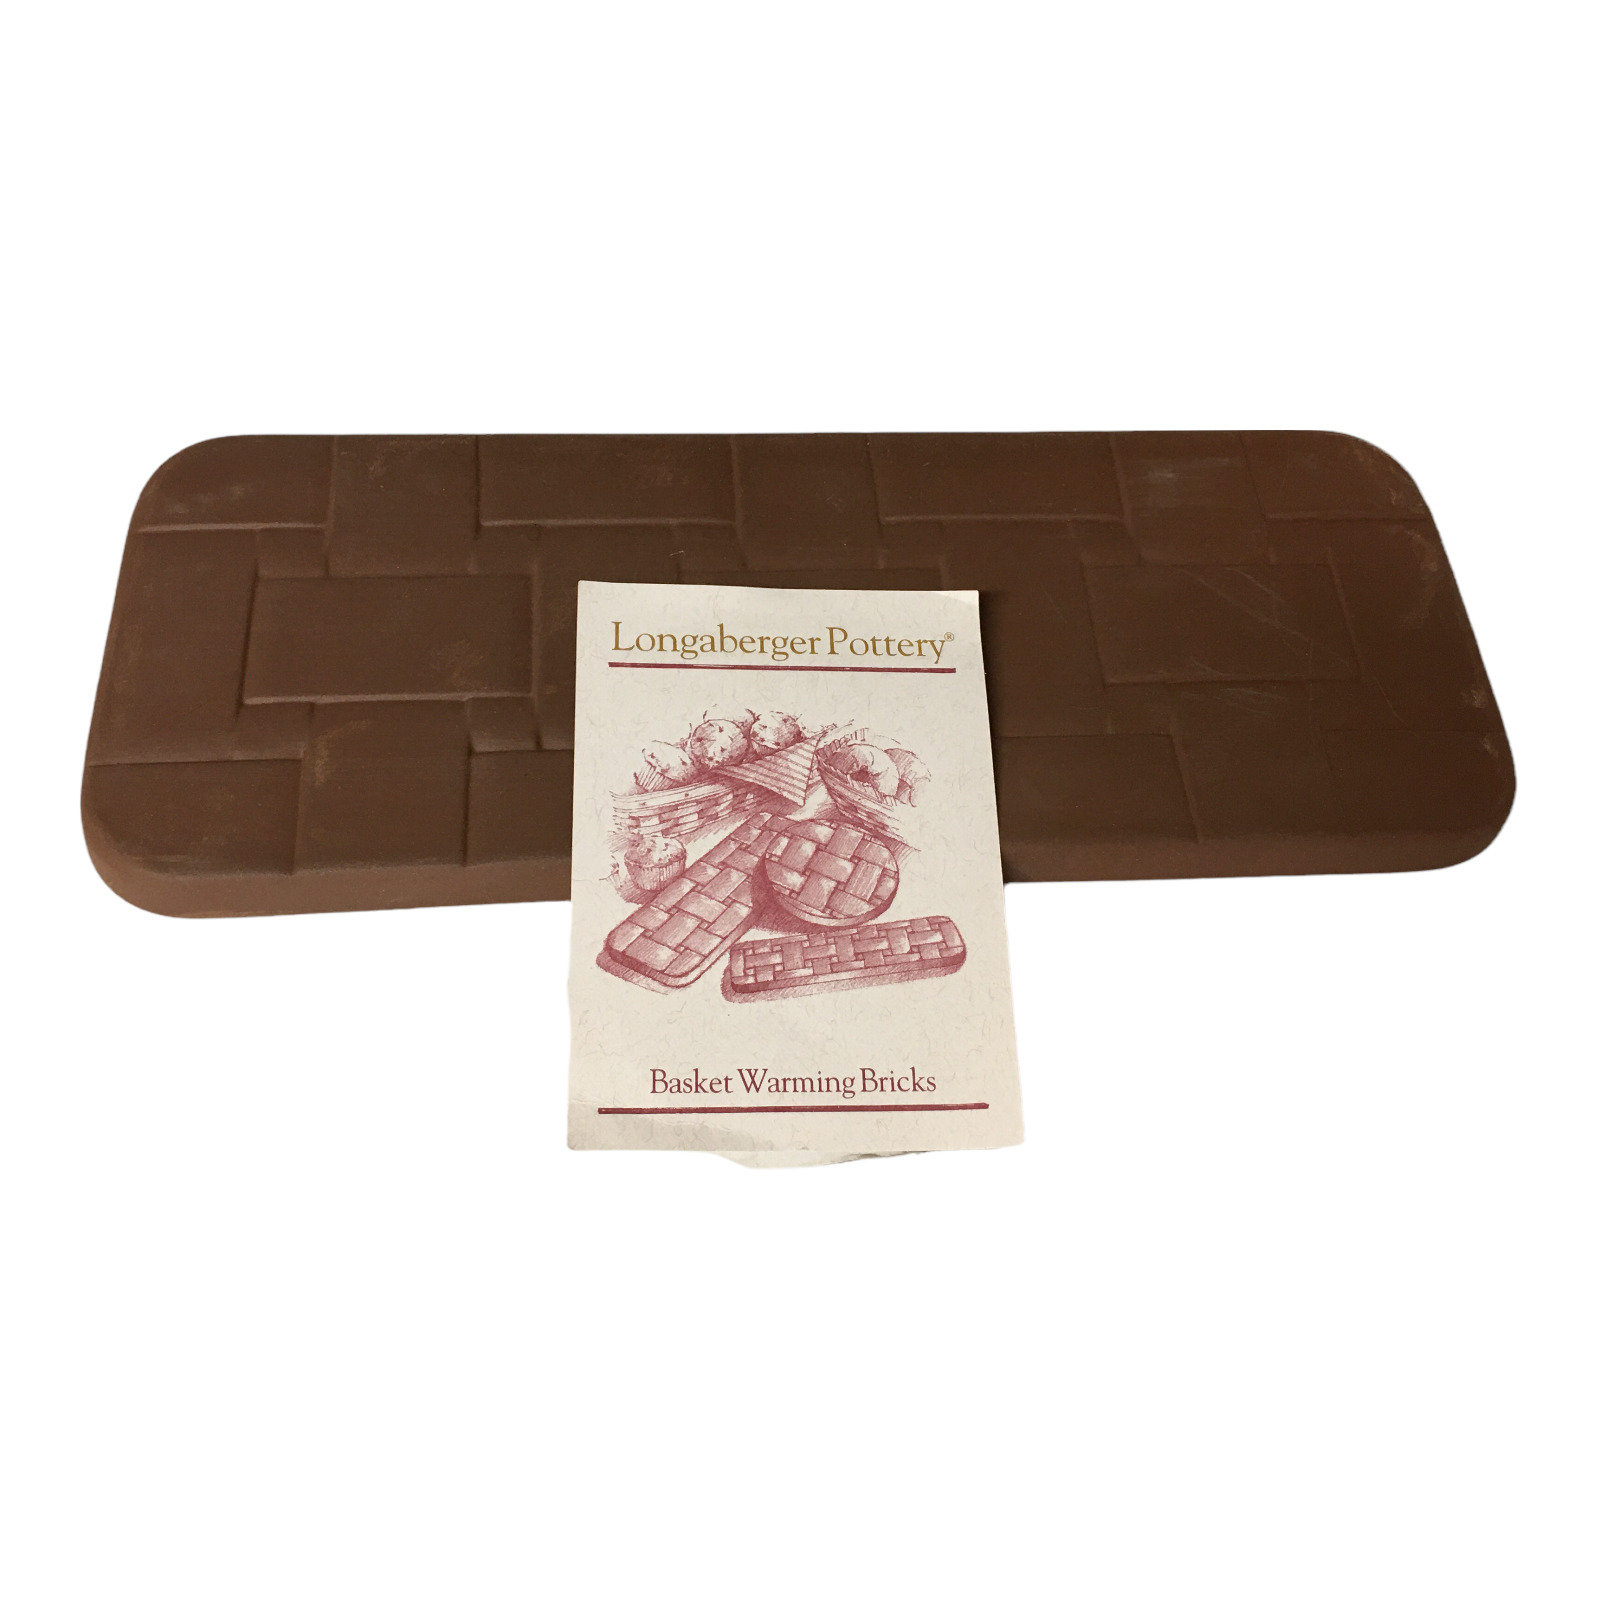 Longaberger Pottery Bread Basket Brick Warming Stone #30074 - 4 1/4” x 11” Box